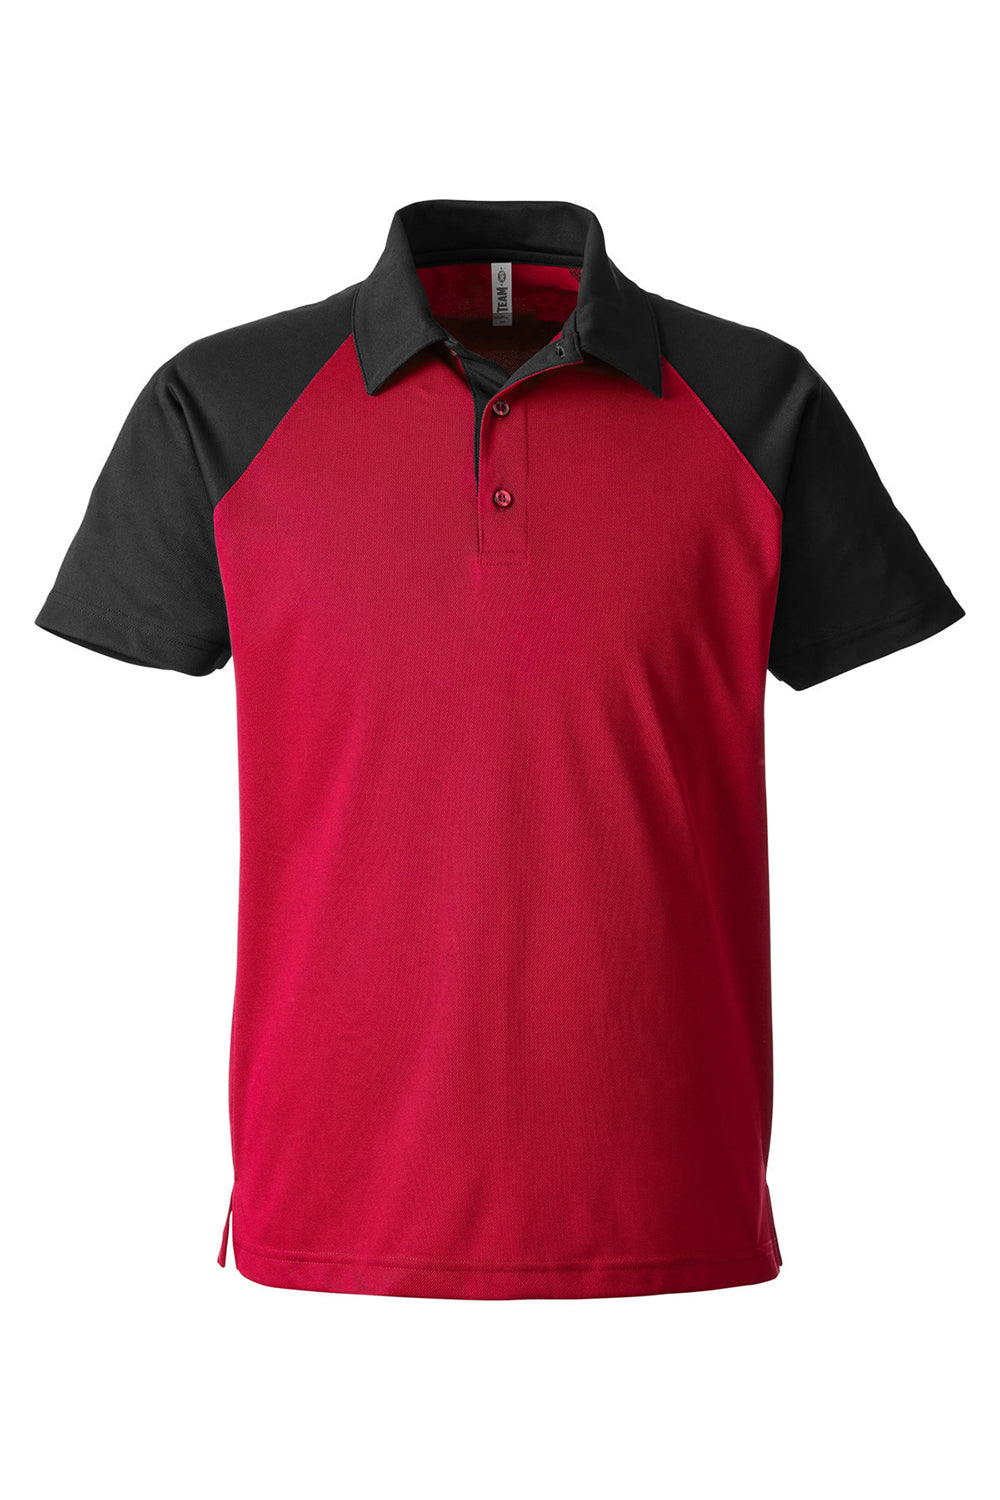 Team 365 TT21C Mens Command Colorblock Moisture Wicking Short Sleeve Polo Shirt Red/Black Flat Front